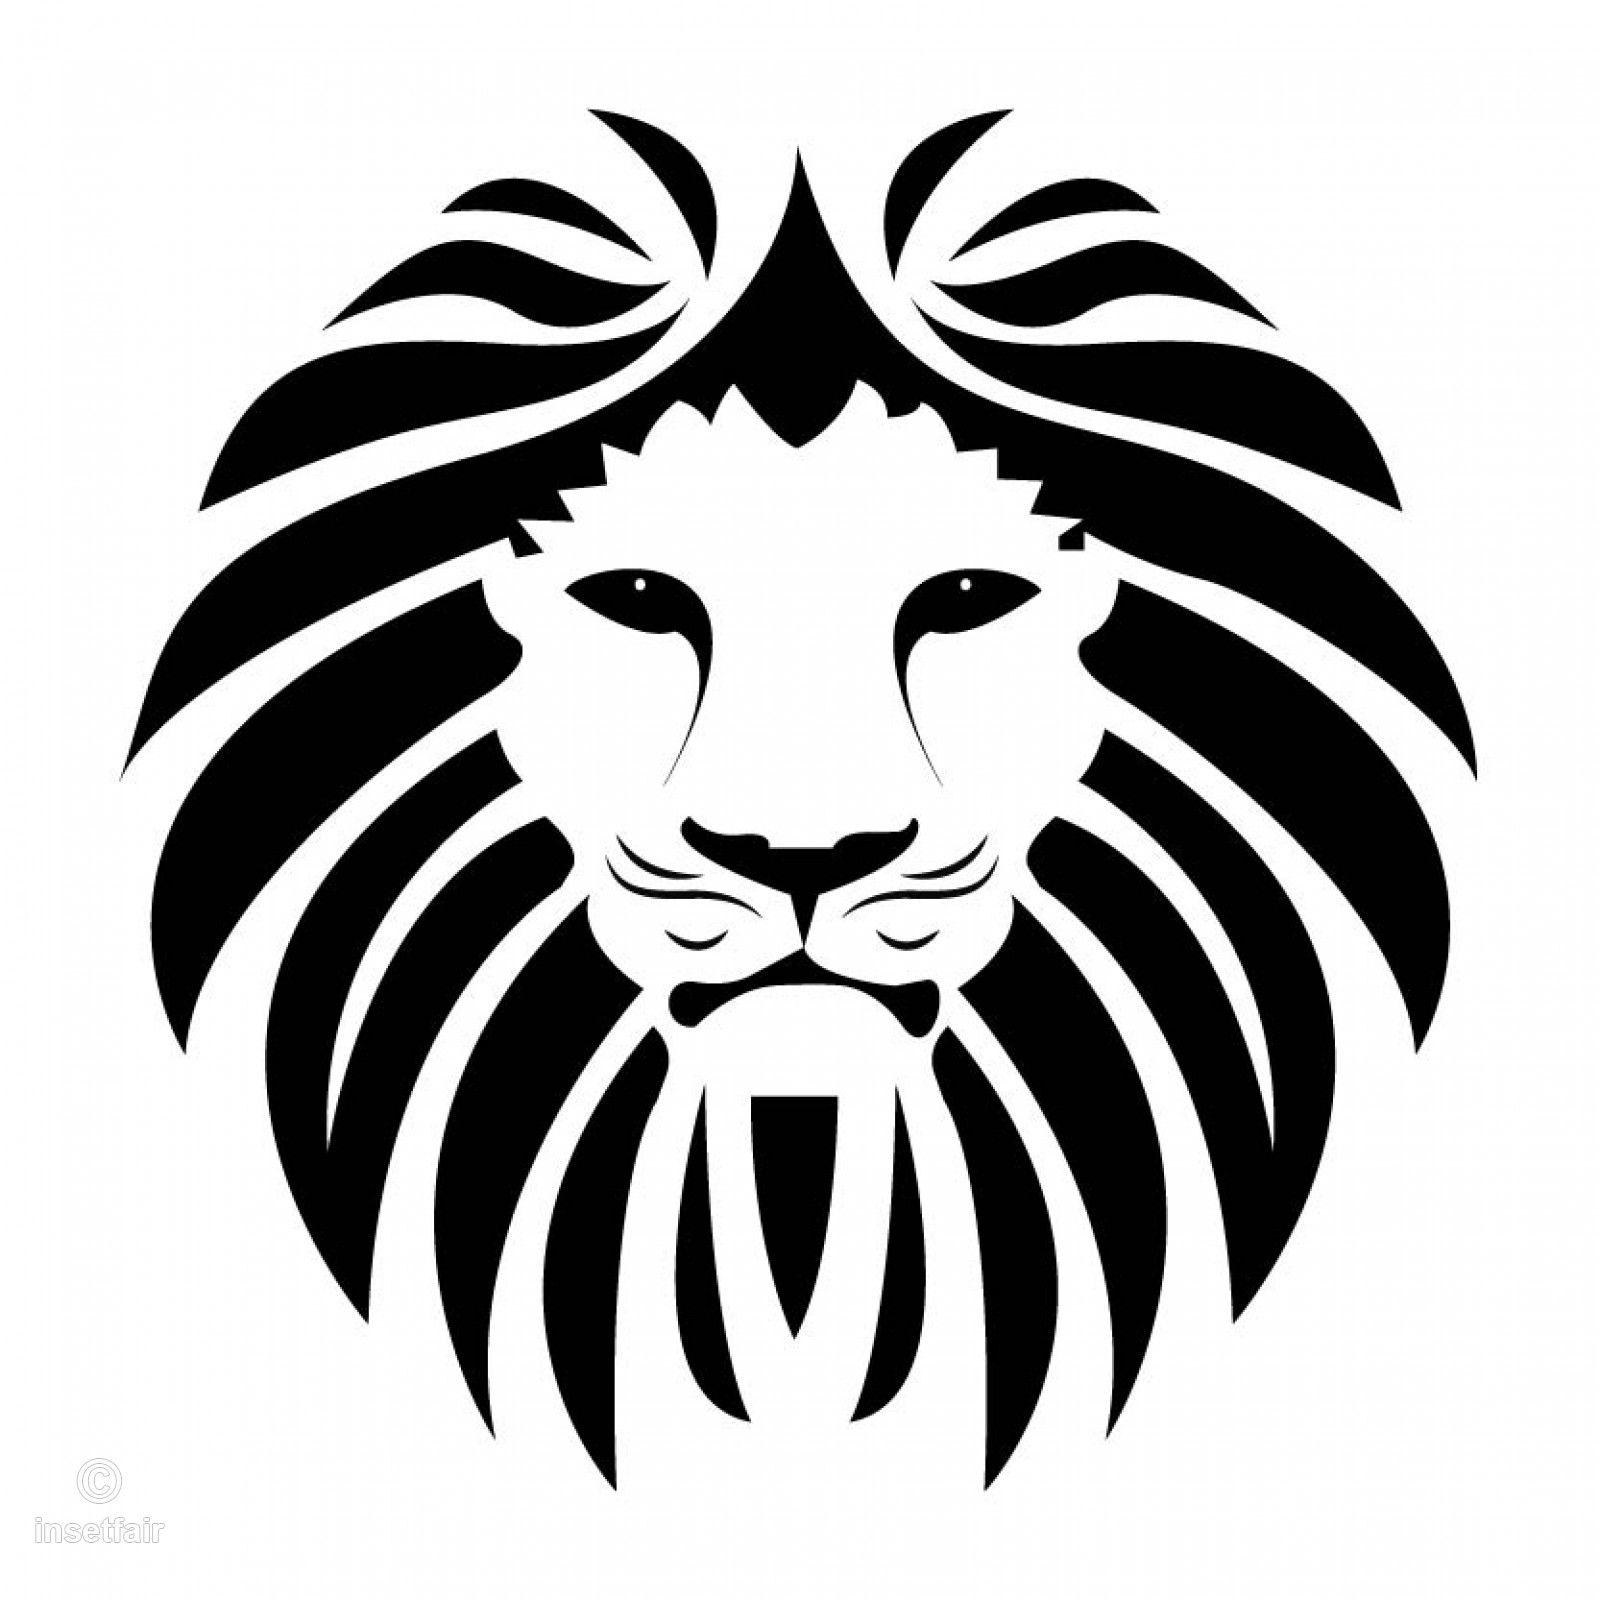 Lion Head Logo - Bold lion head logo in black